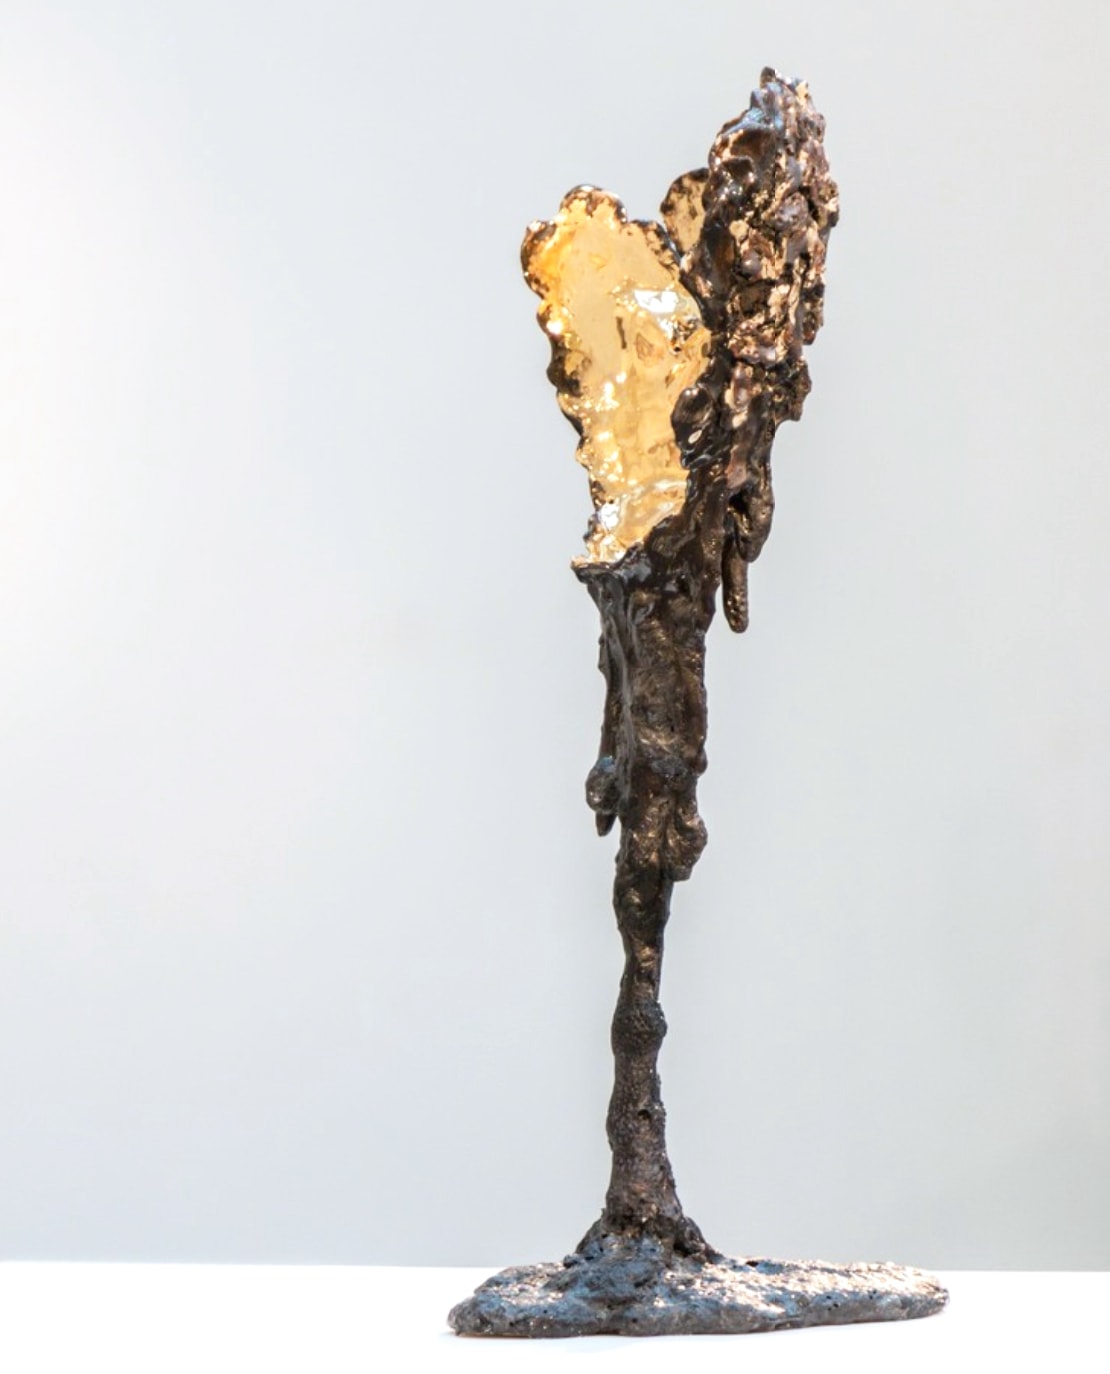 Samuel Yal, Magma, Grès, émail, or, 45x22x22 cm, 2017